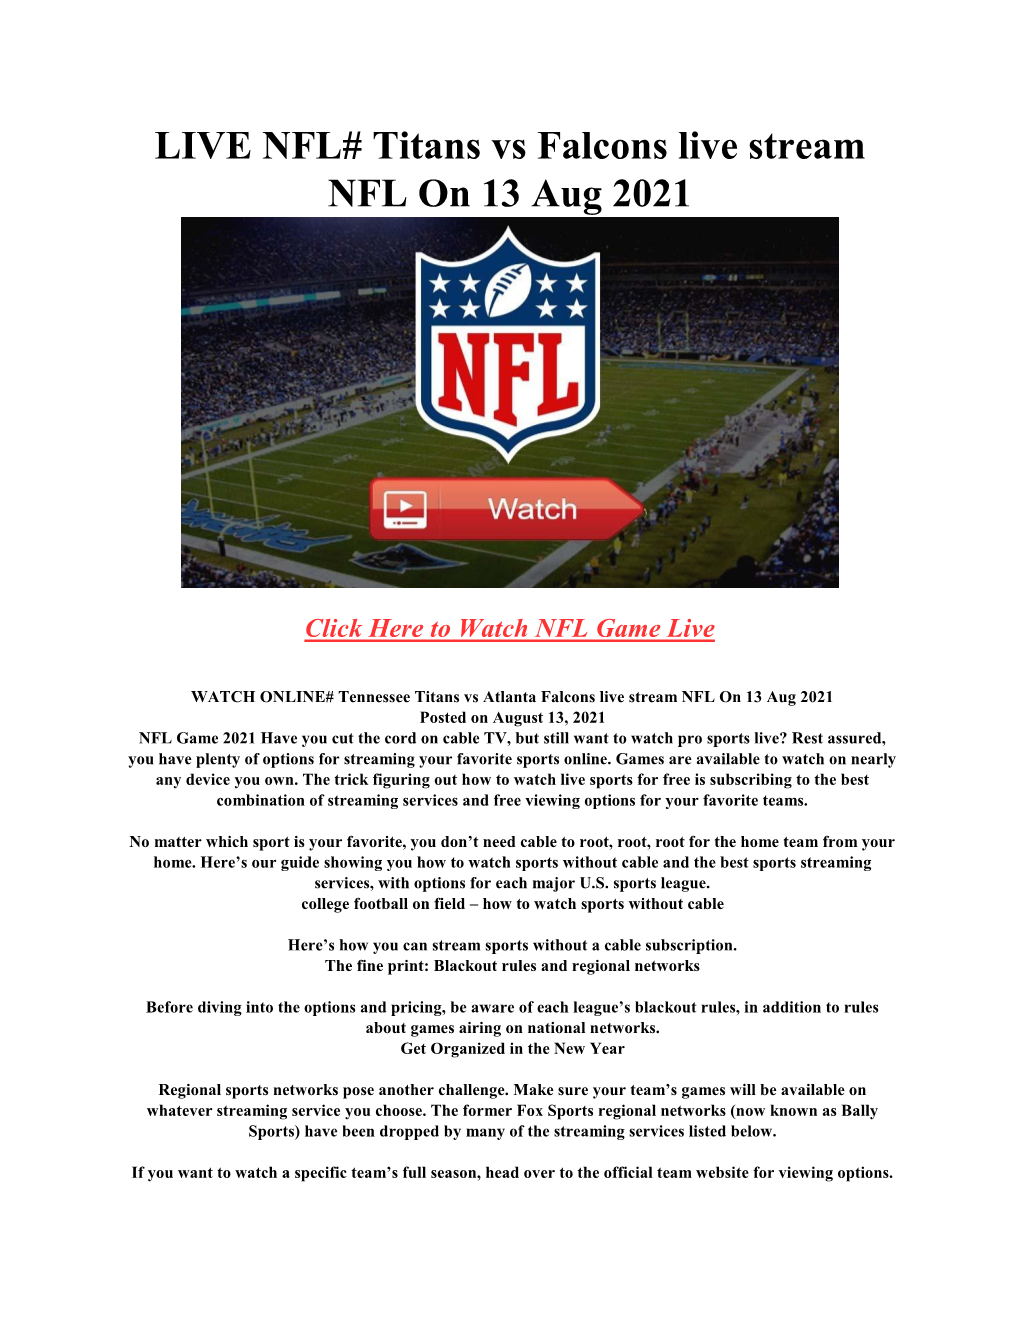 LIVE NFL# Titans Vs Falcons Live Stream NFL on 13 Aug 2021